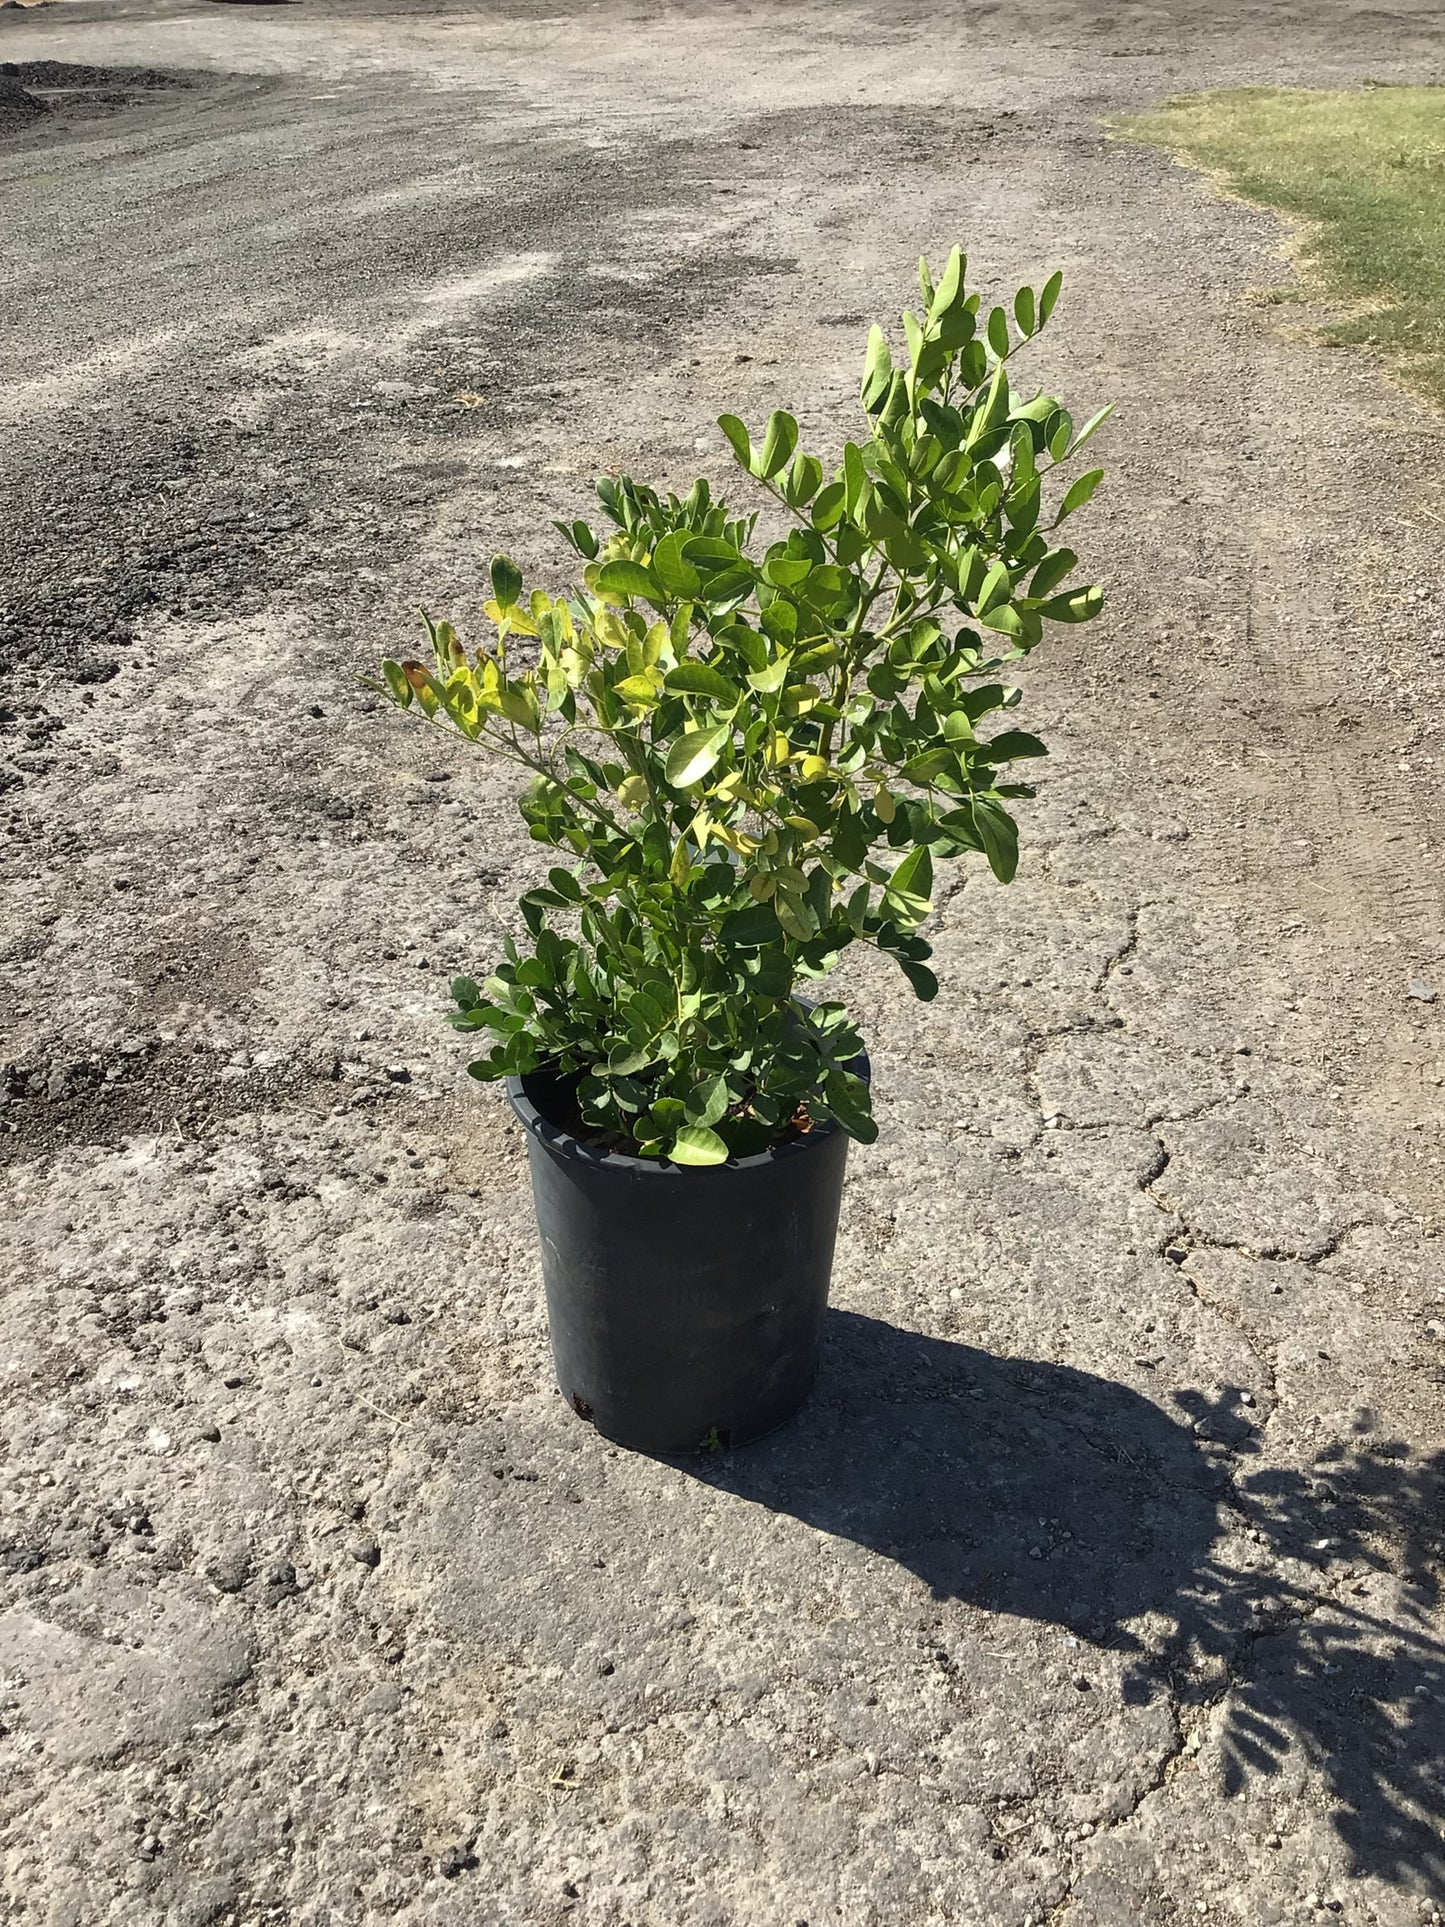 Texas Mountain Laurel (Sophora secundiflora)